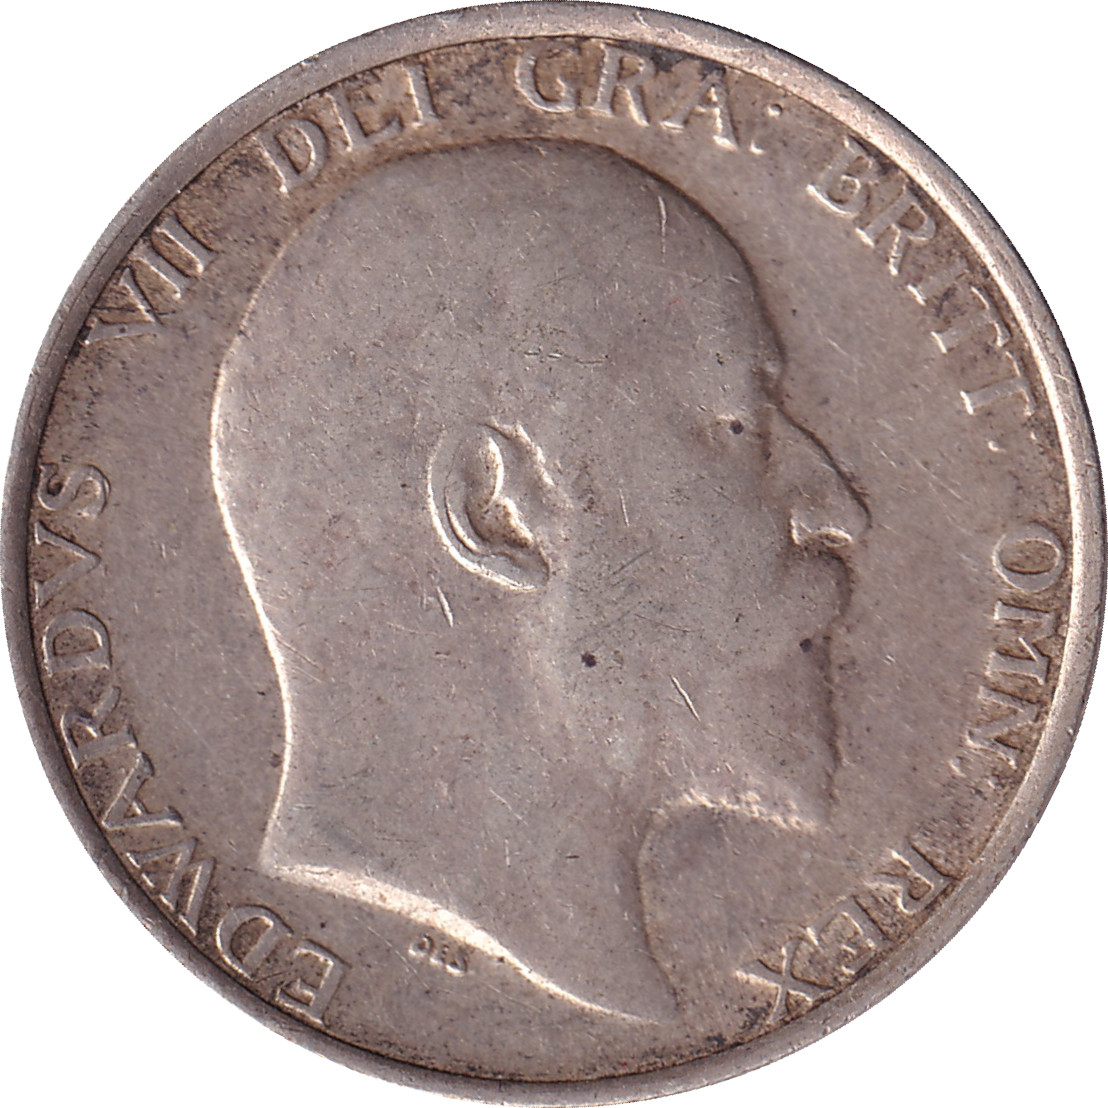 1 shilling - Edouard VII